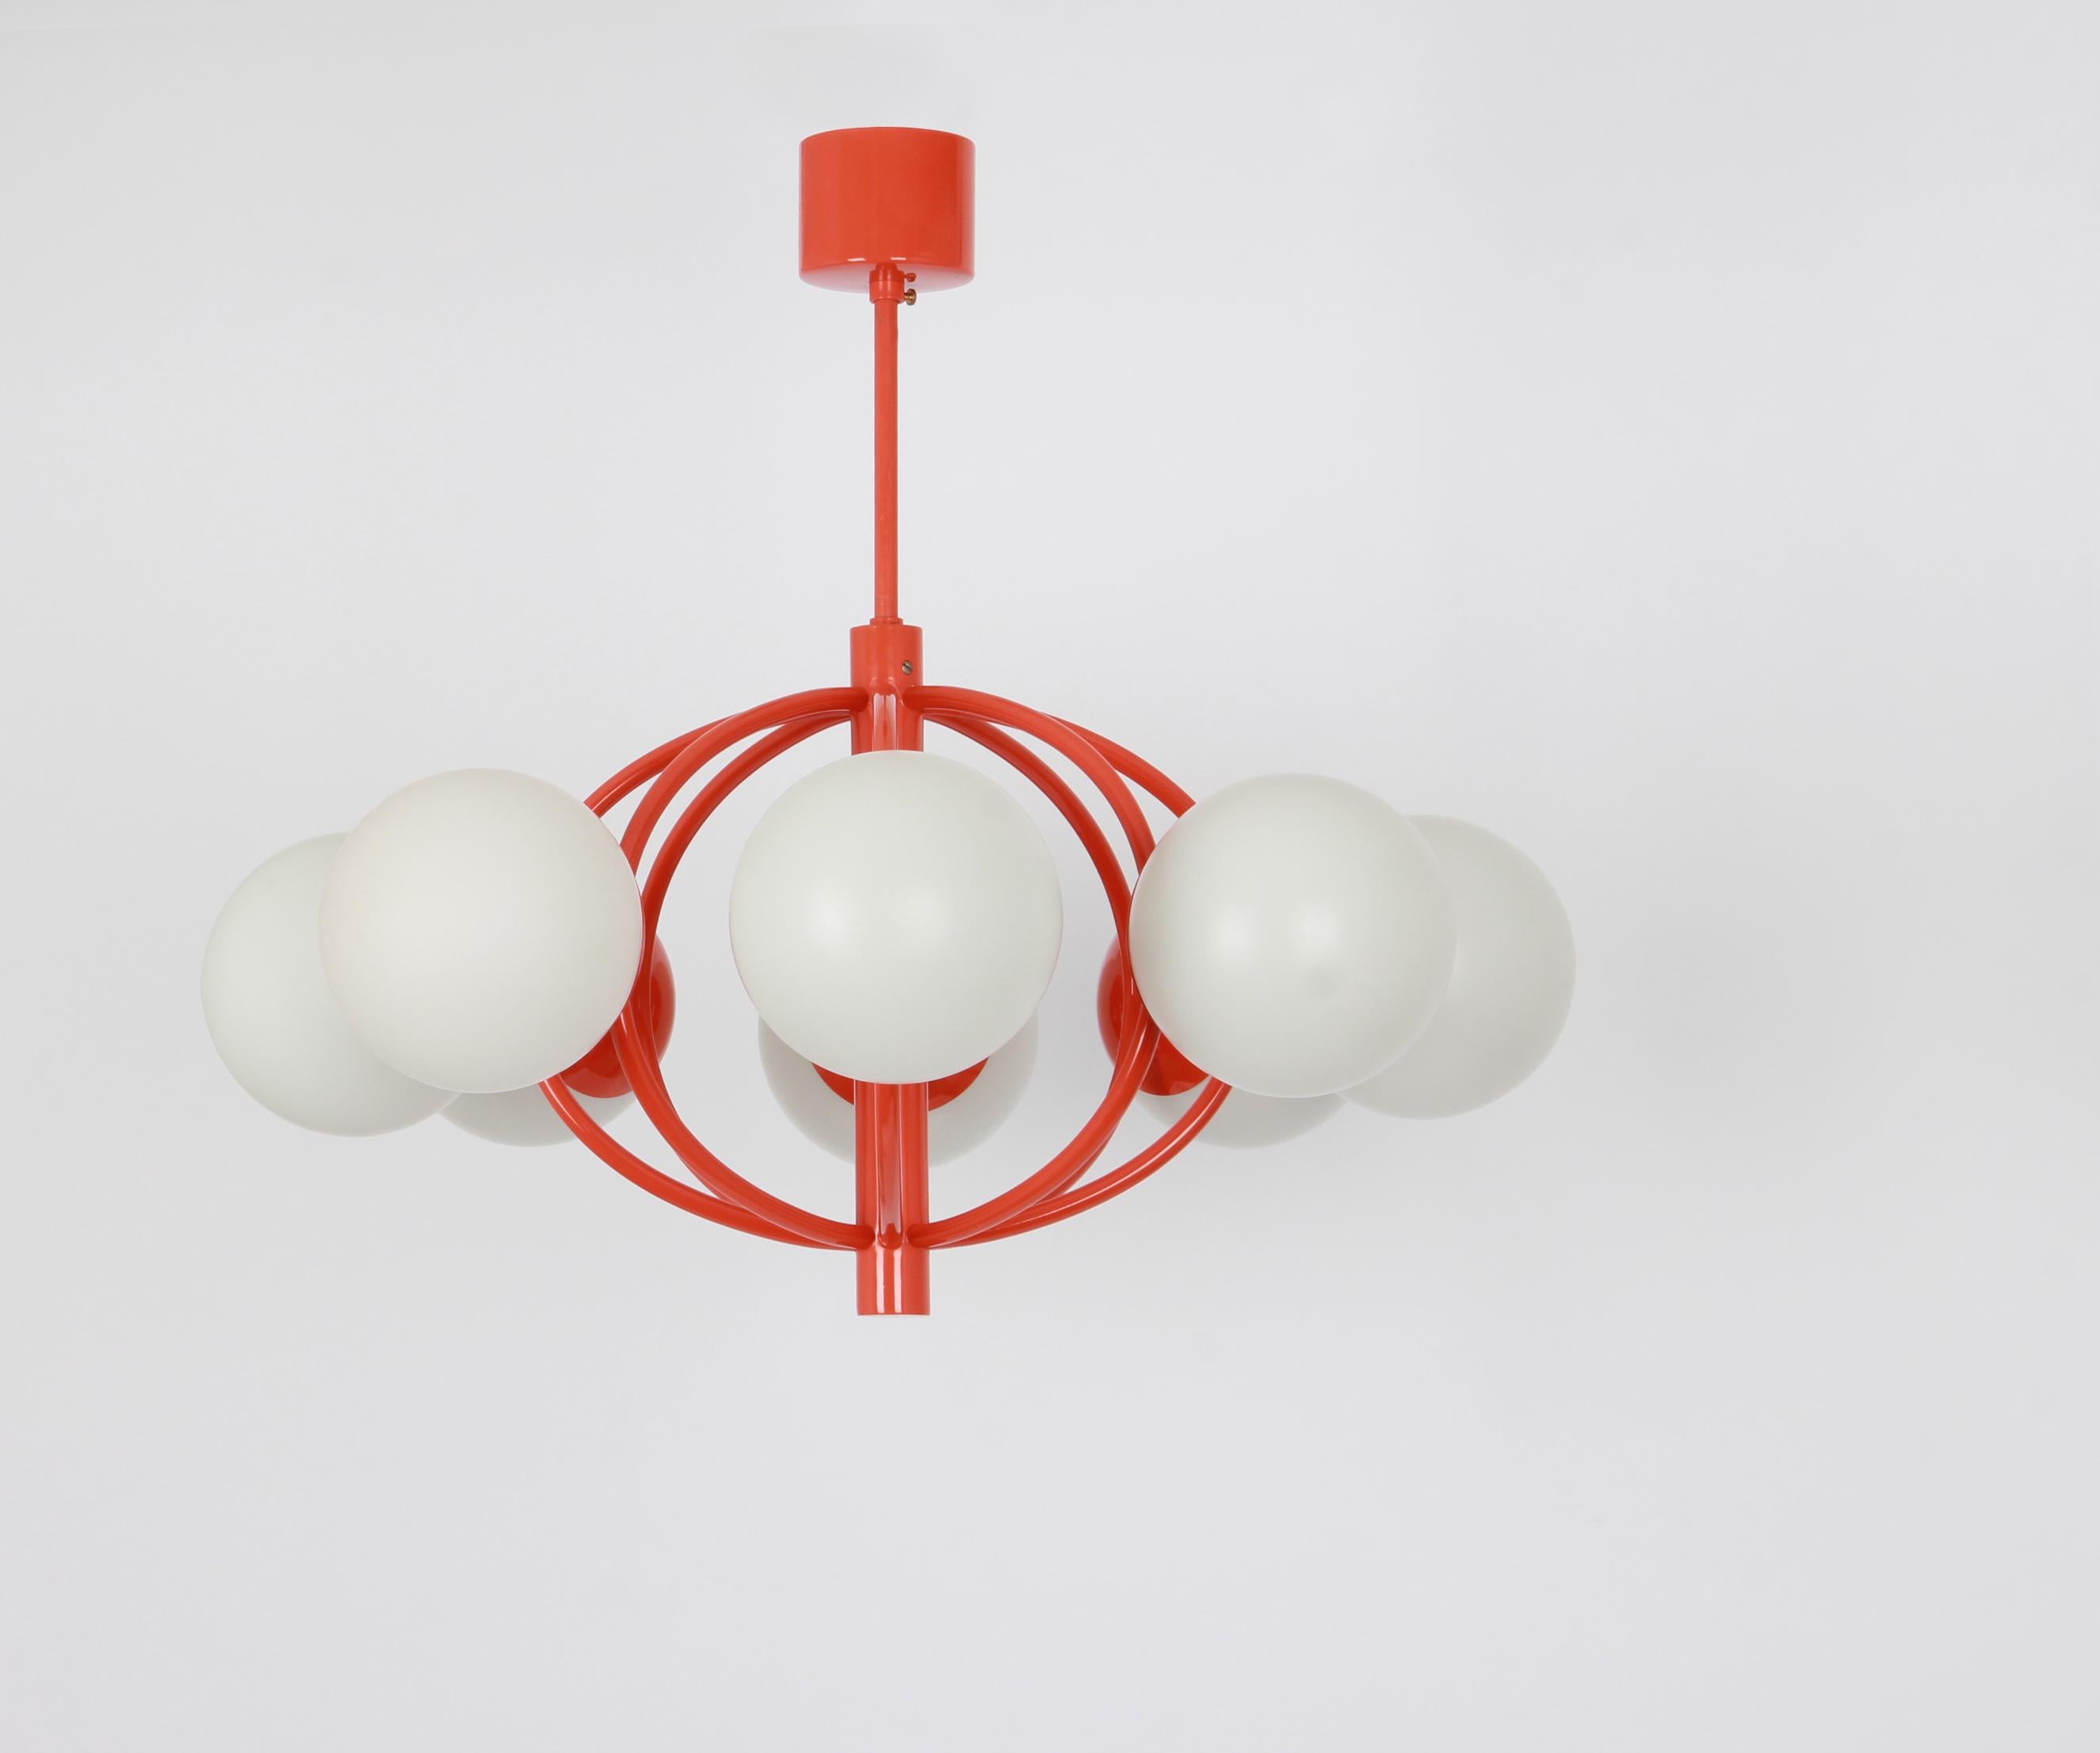 Late 20th Century Midcentury Orbital Ceiling Lamp Pendant in Orange by Kaiser, Germany, 1960s